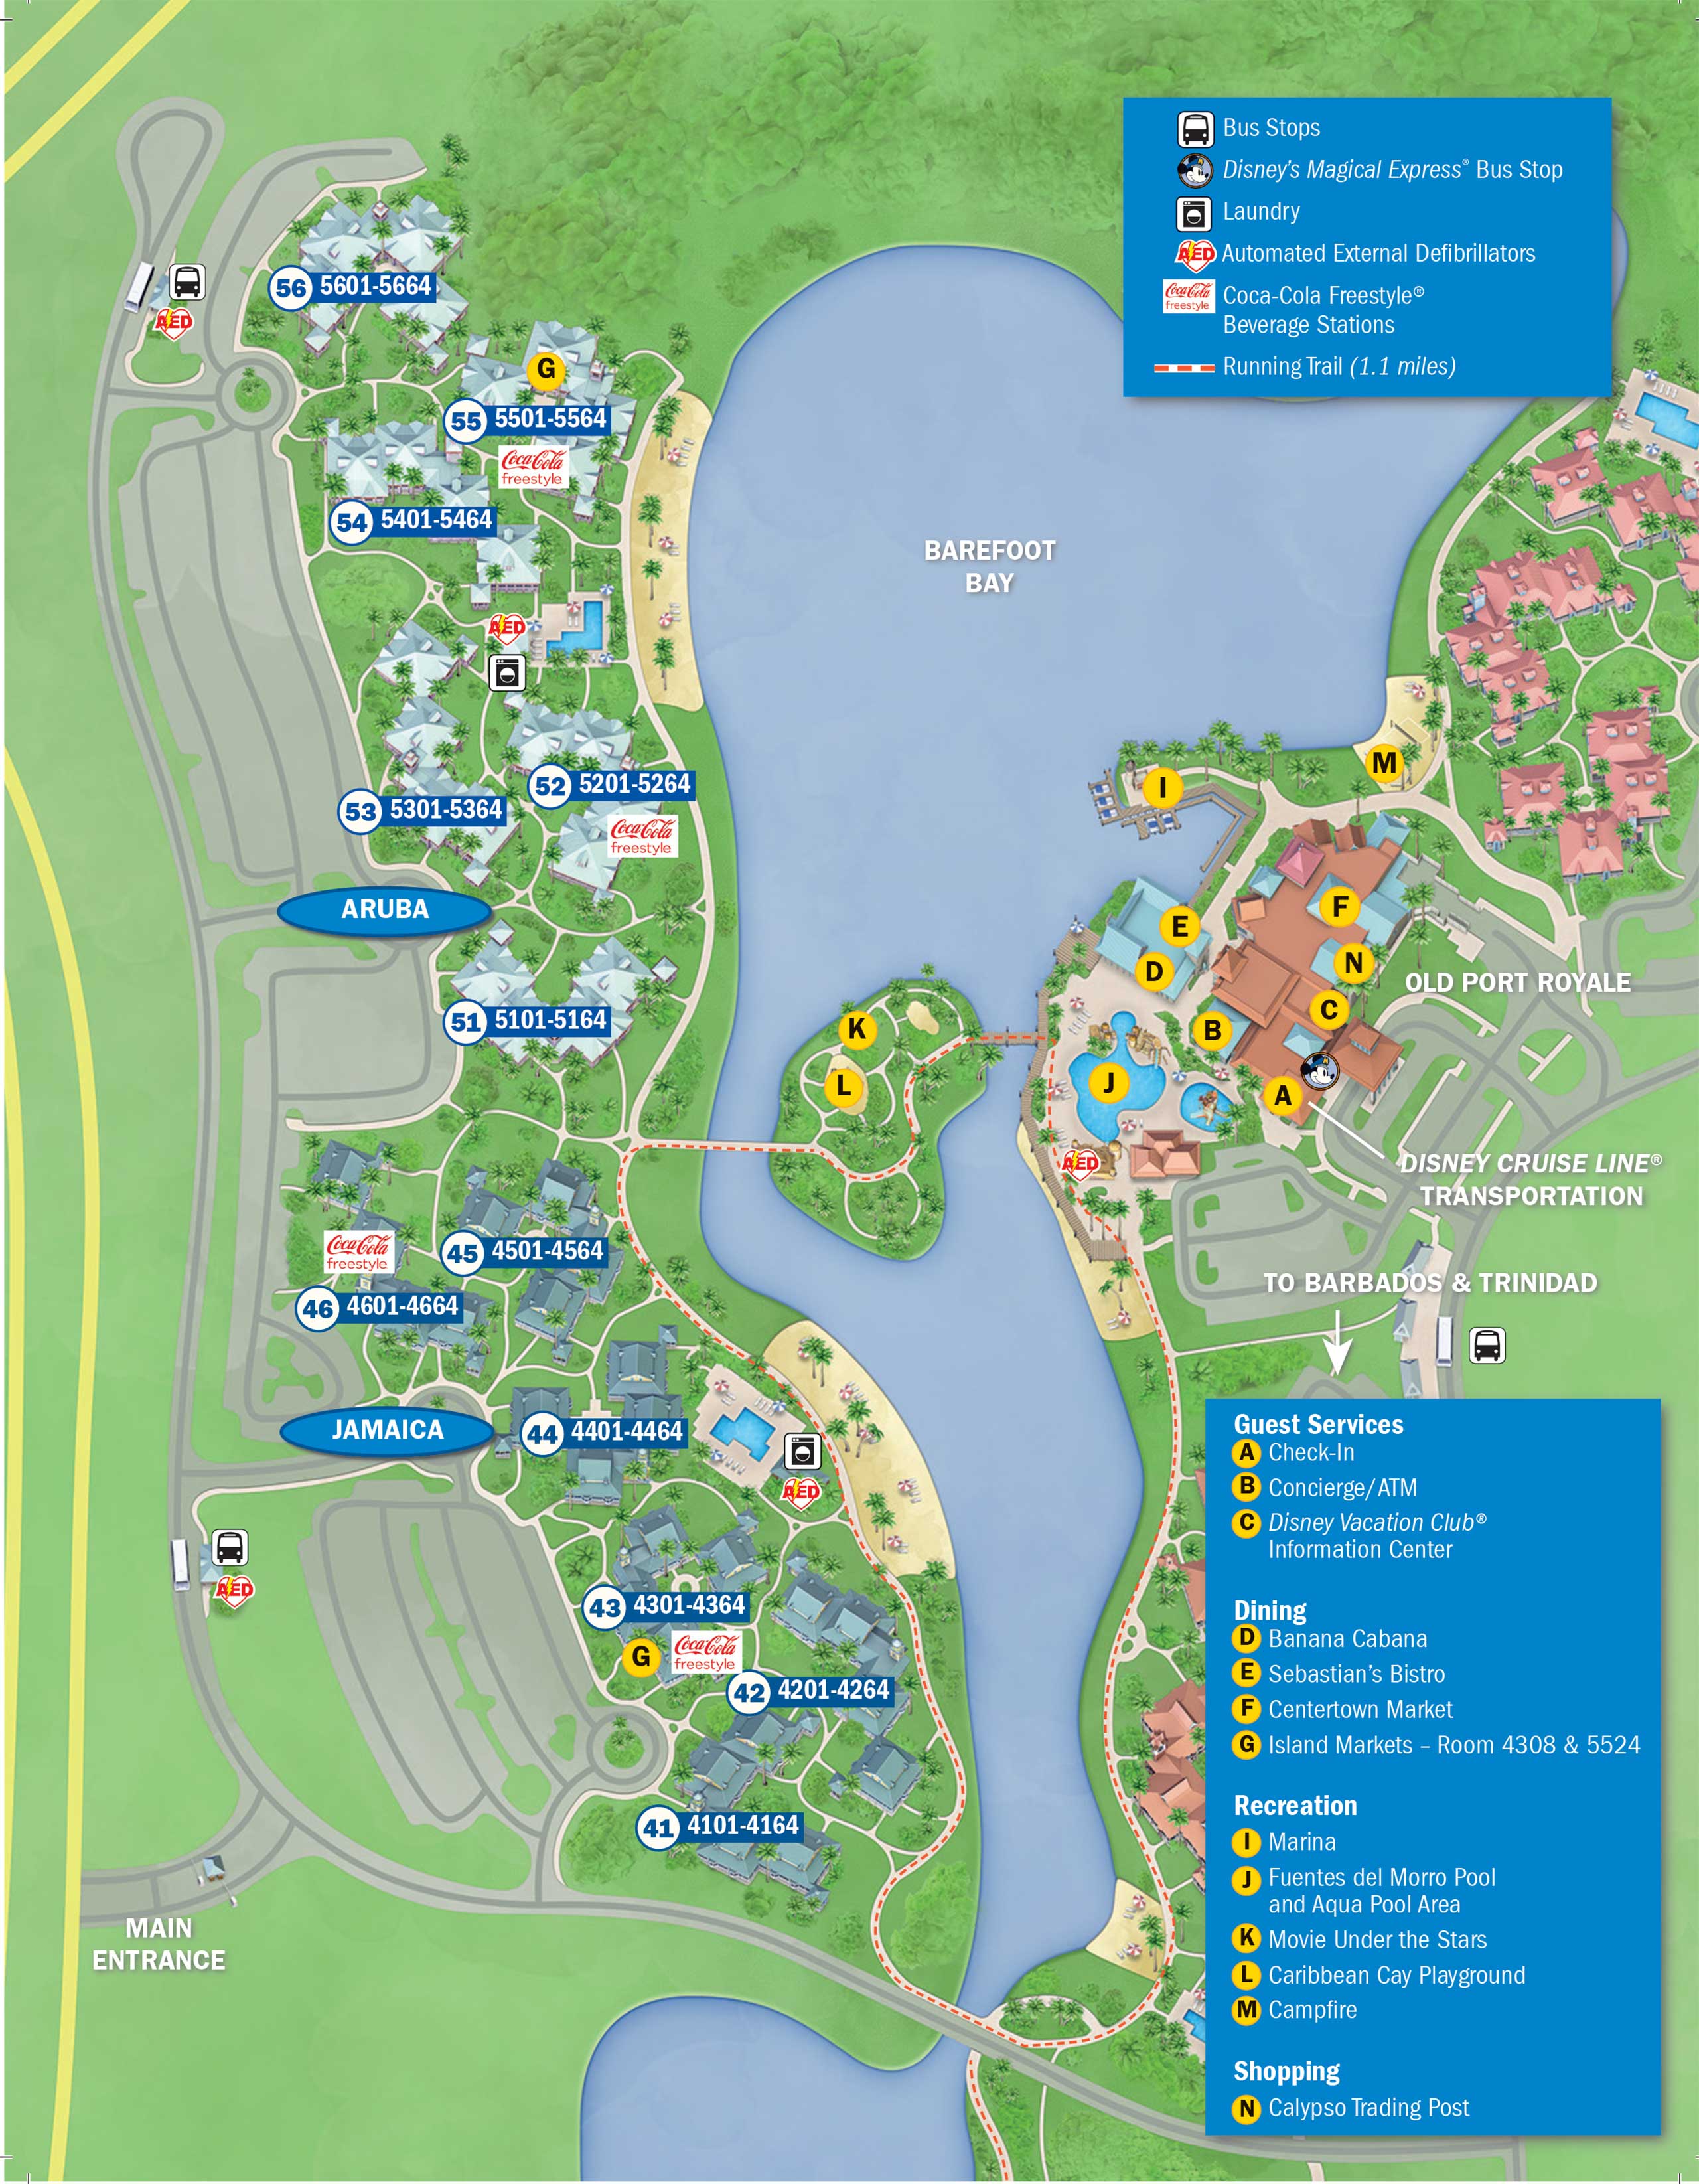 PHOTOS - New guide map for Disney's Caribbean Beach Resort